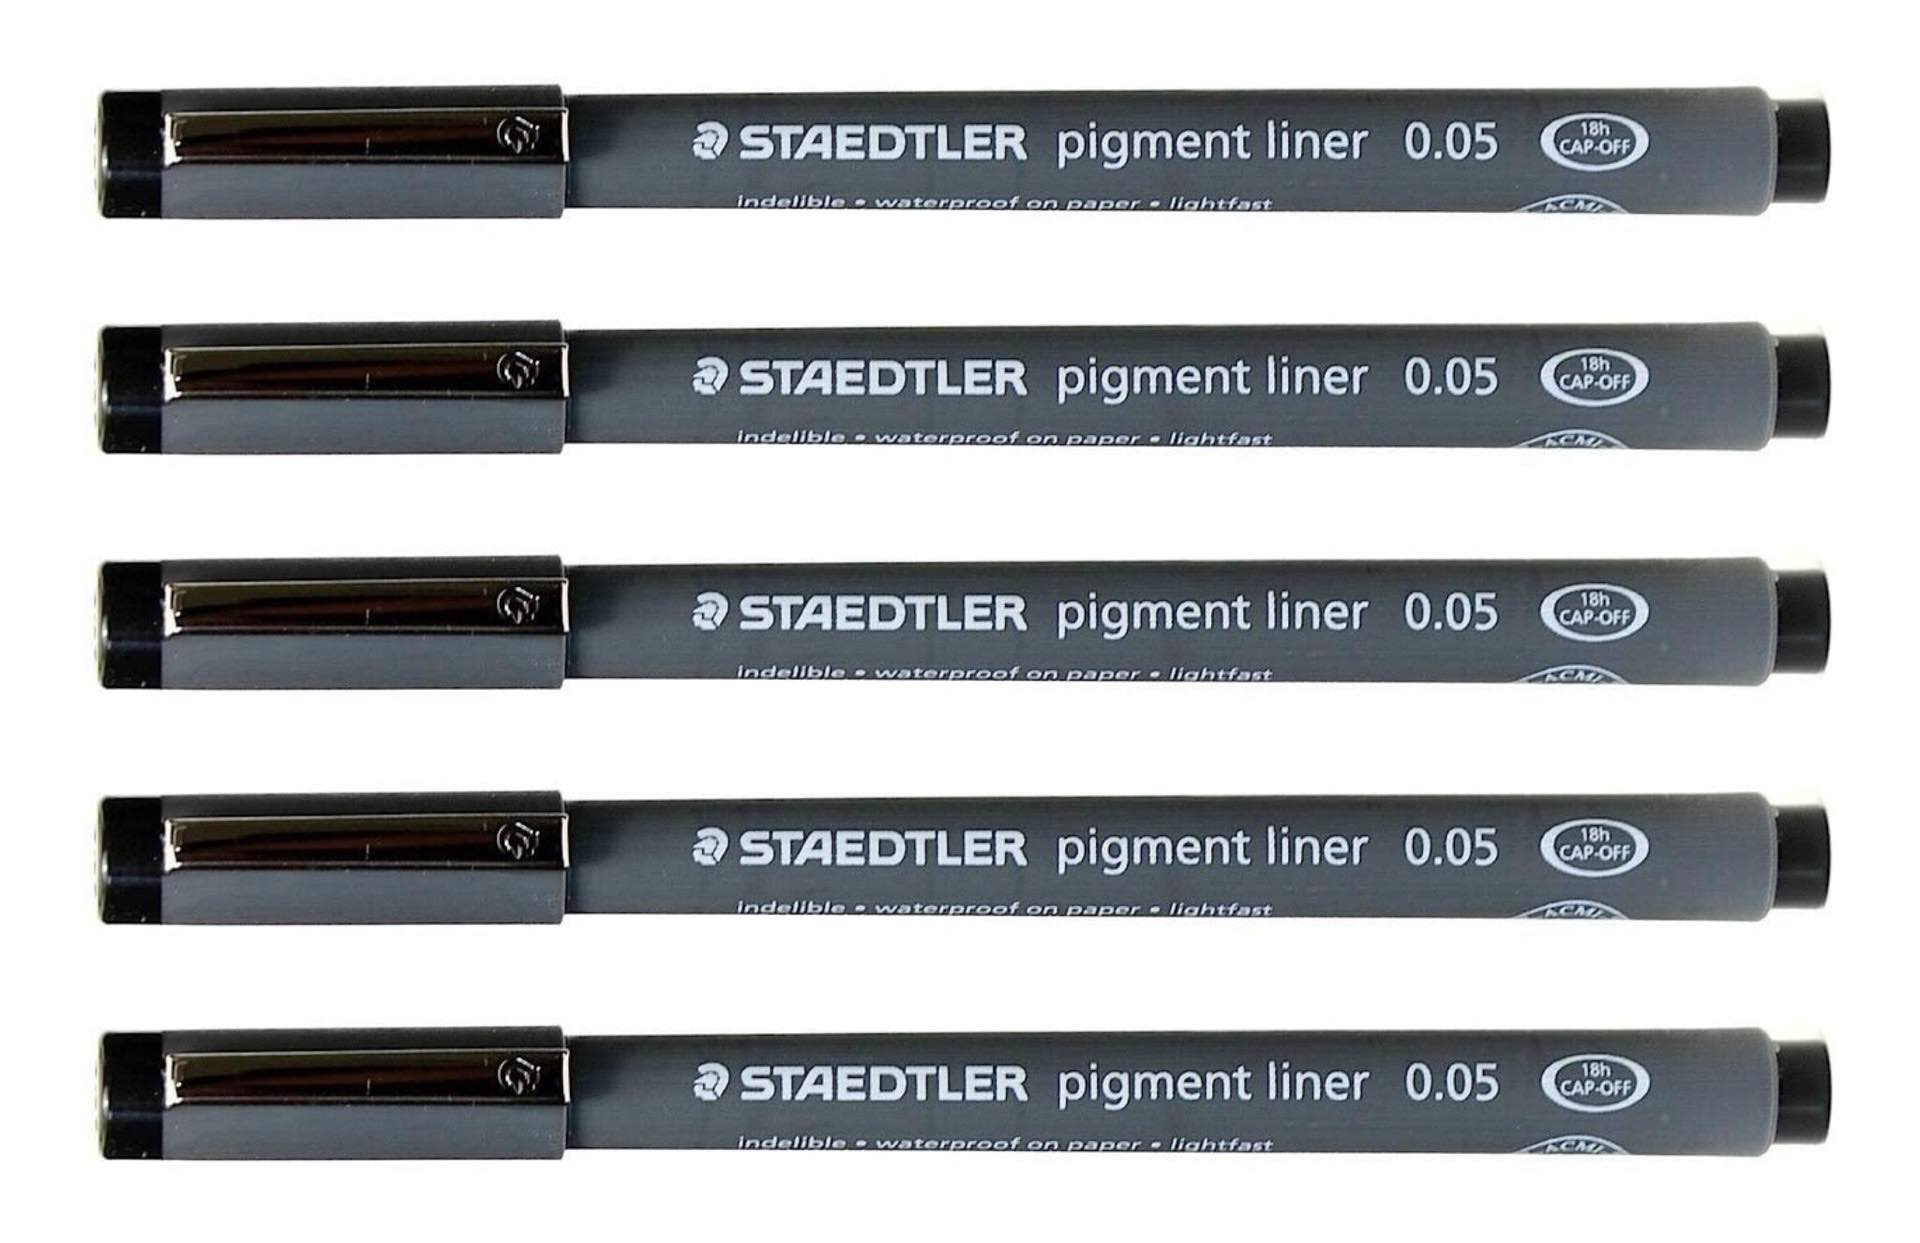 staedtler-0-05mm-pigment-liner-pens